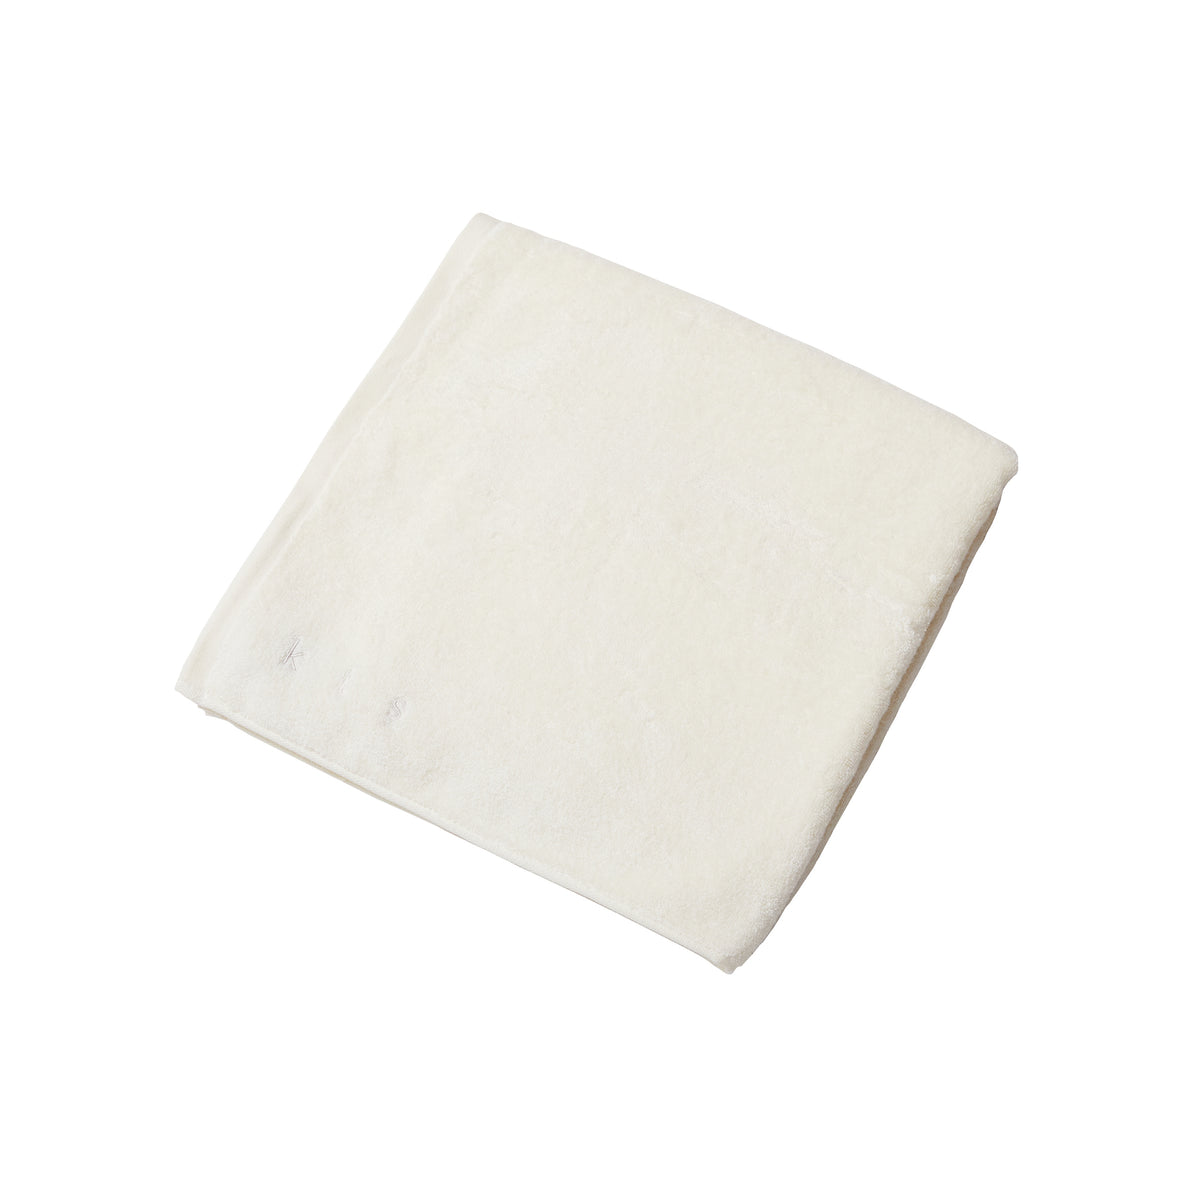 Bath towel（oyster white / オフホワイト)限定カラー | kts-product